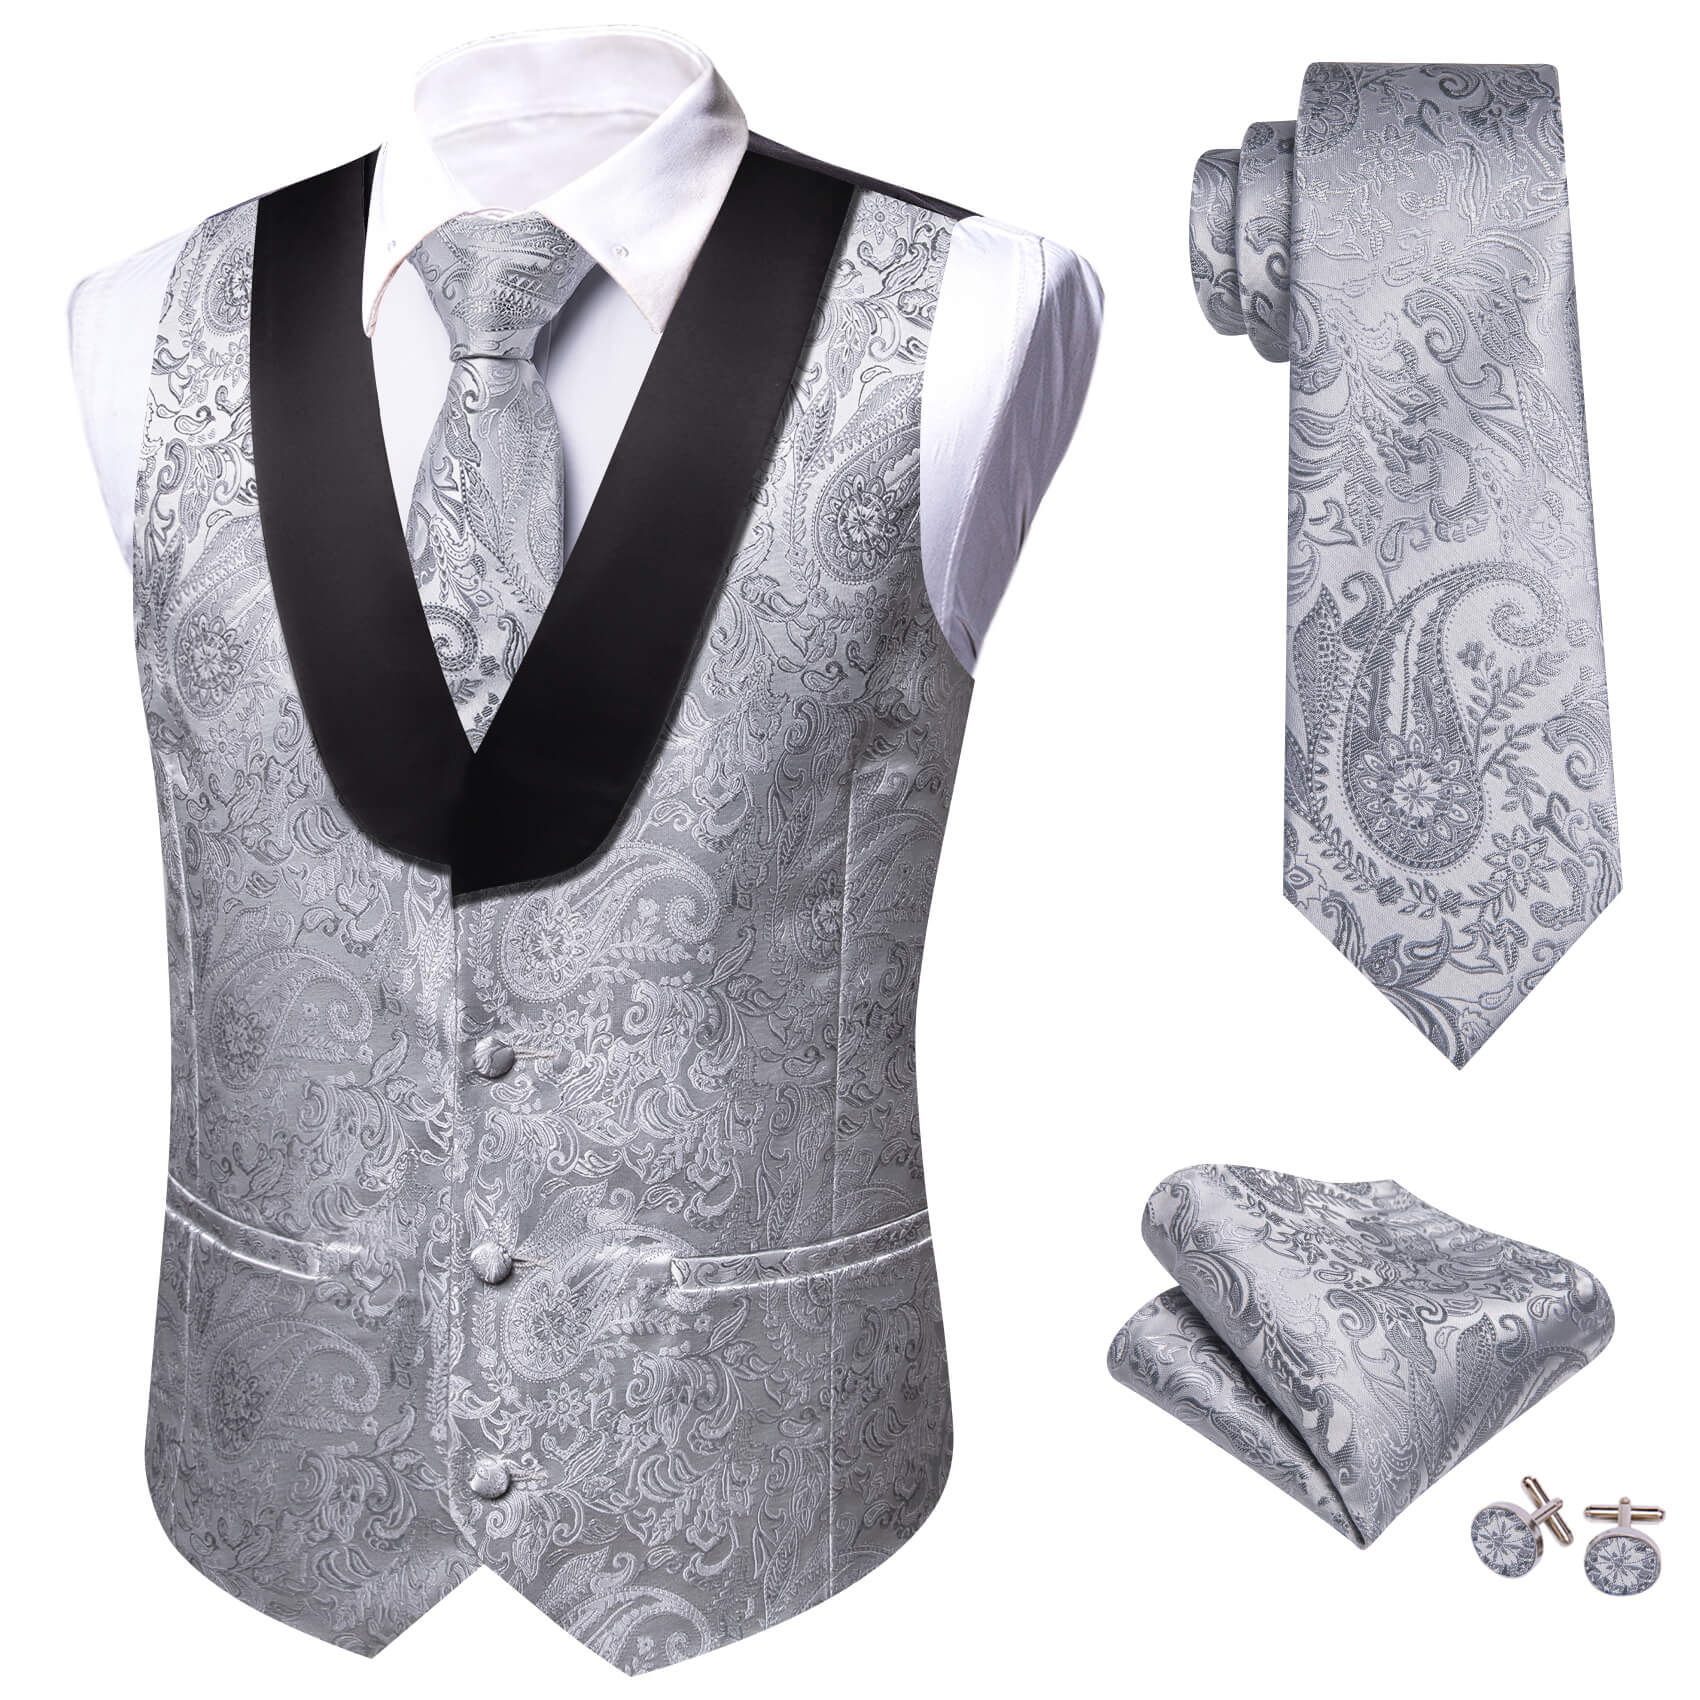 Barry.wang Shawl Collar Vest Silver Grey Paisley Men's Silk Vest Tie Hanky Cufflinks Set